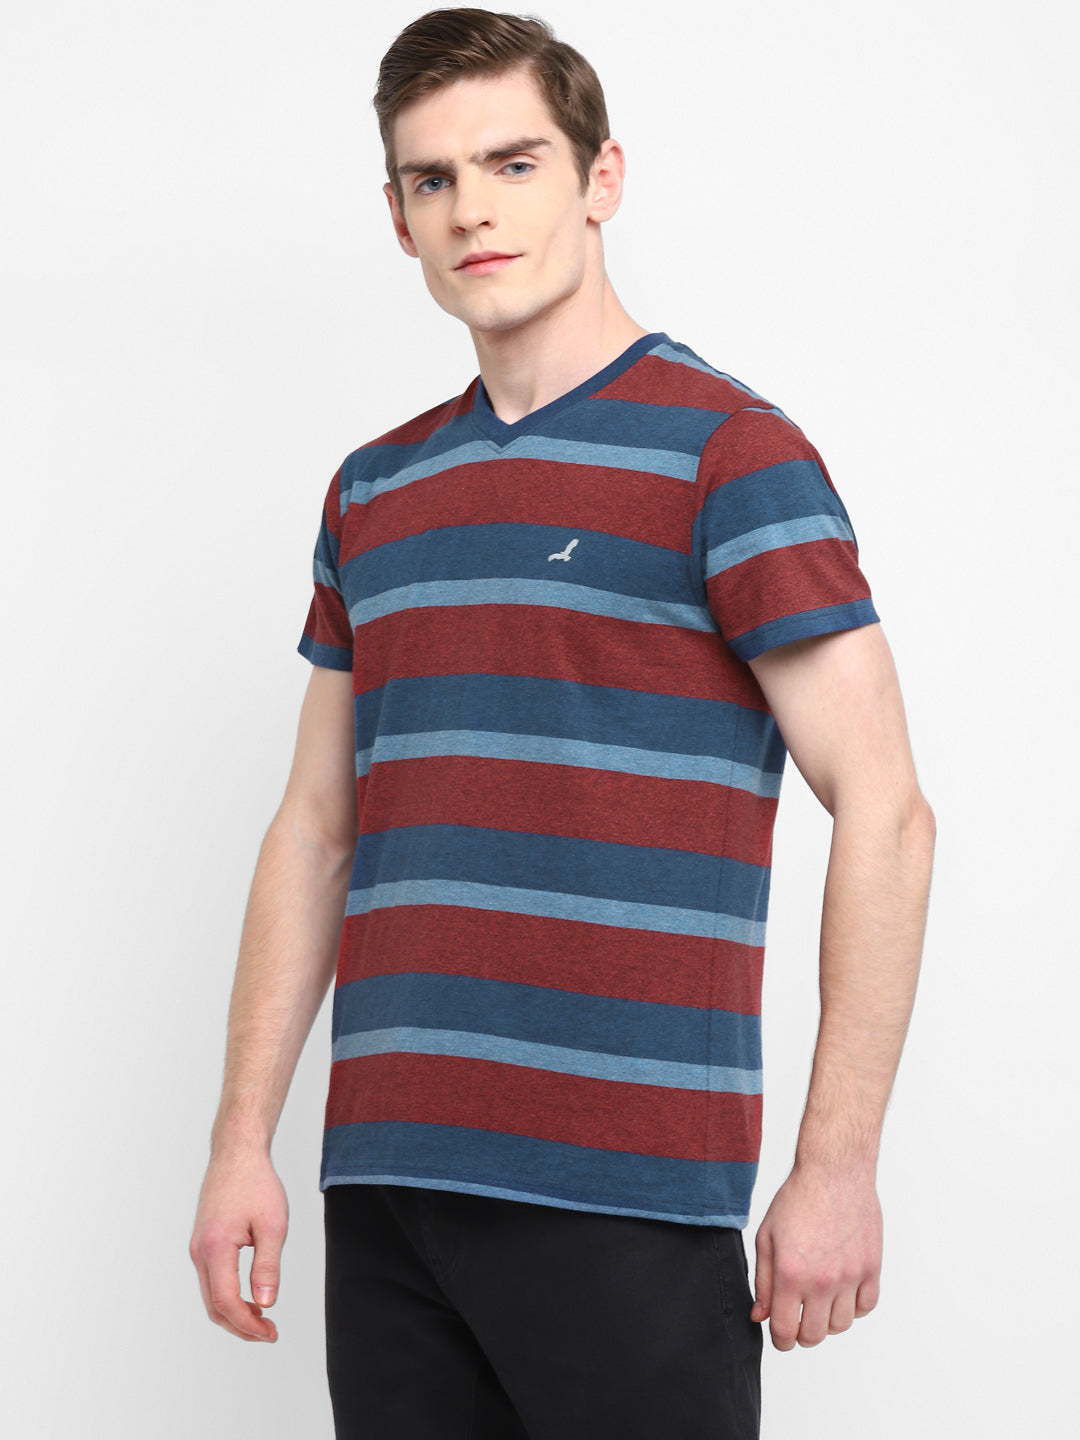 Premium Basics - 100% Cotton Striped V Neck T-Shirt For Men - Blue & Red